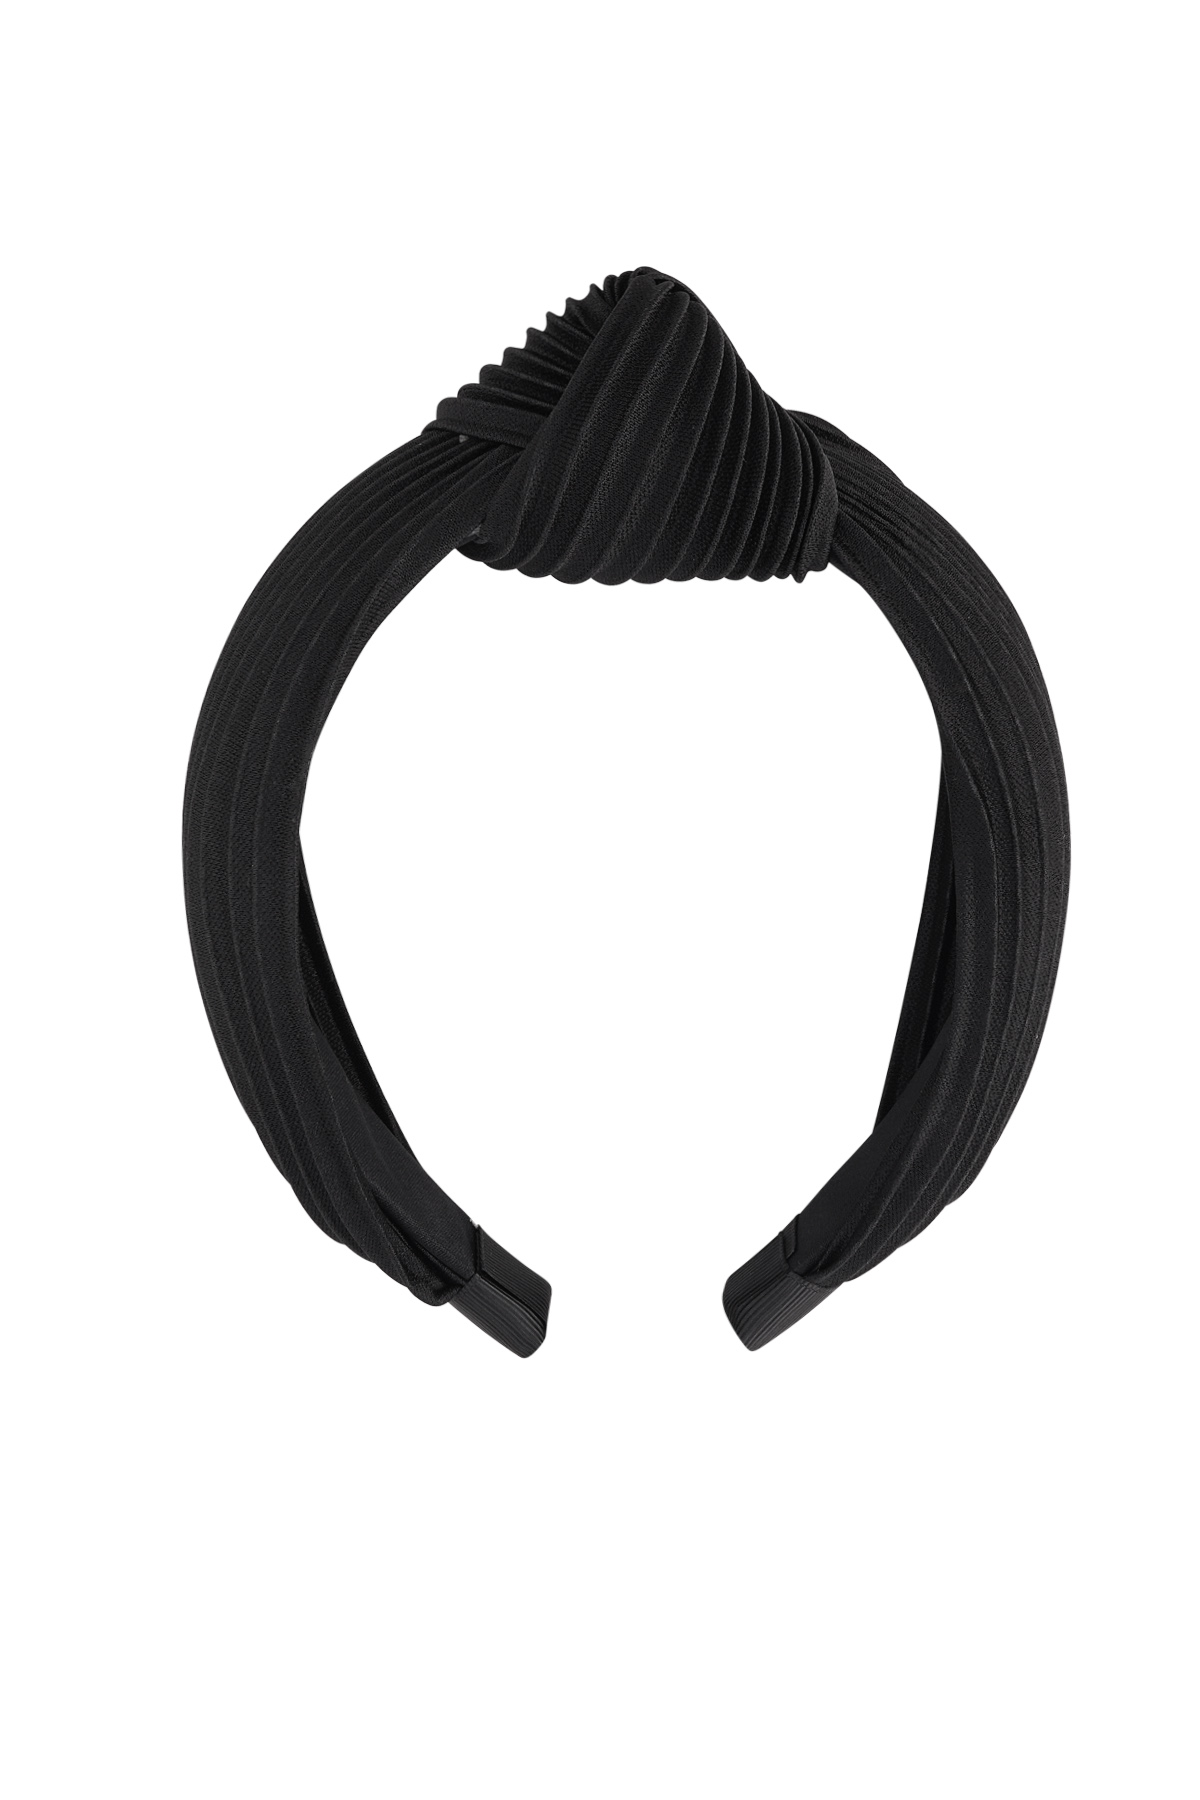 Hairband rib with knot - black Plastic